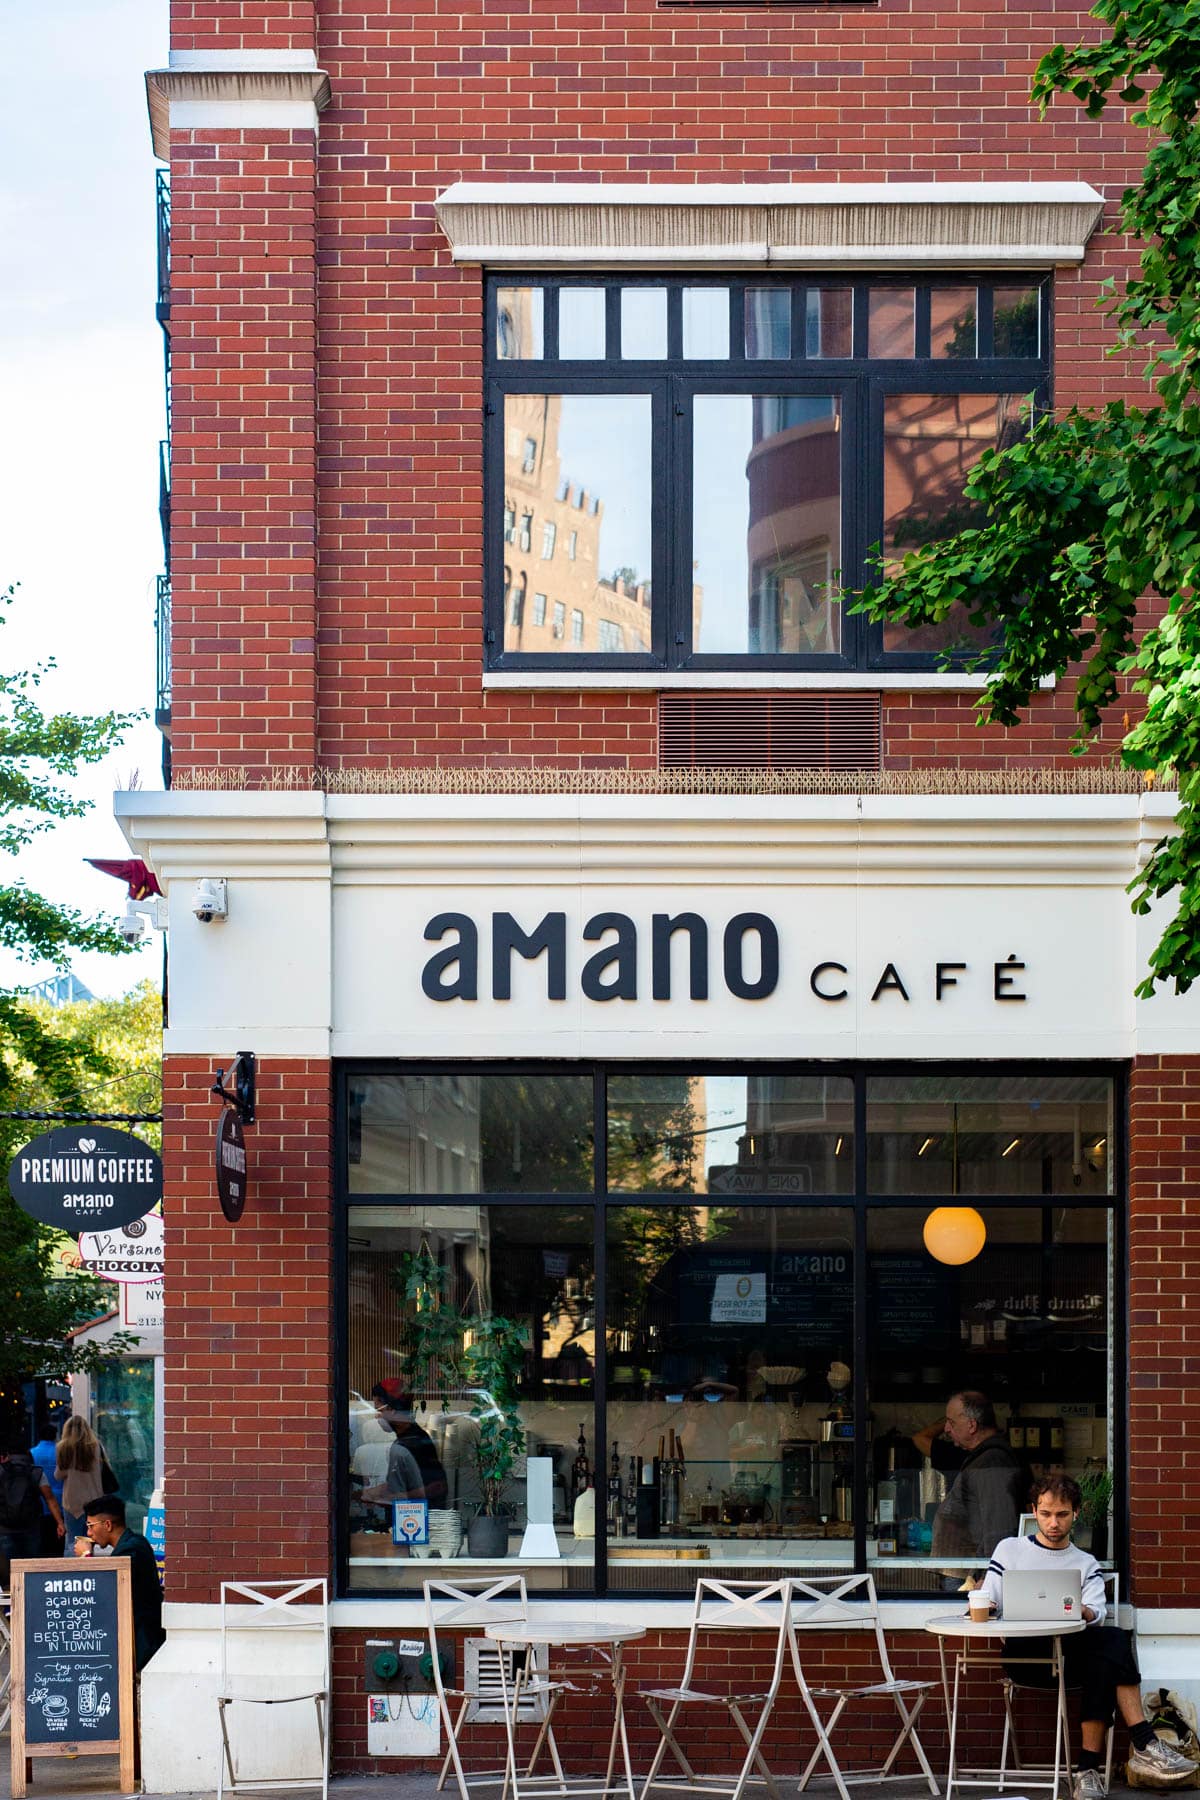 Amano Cafe, best coffee shops west village